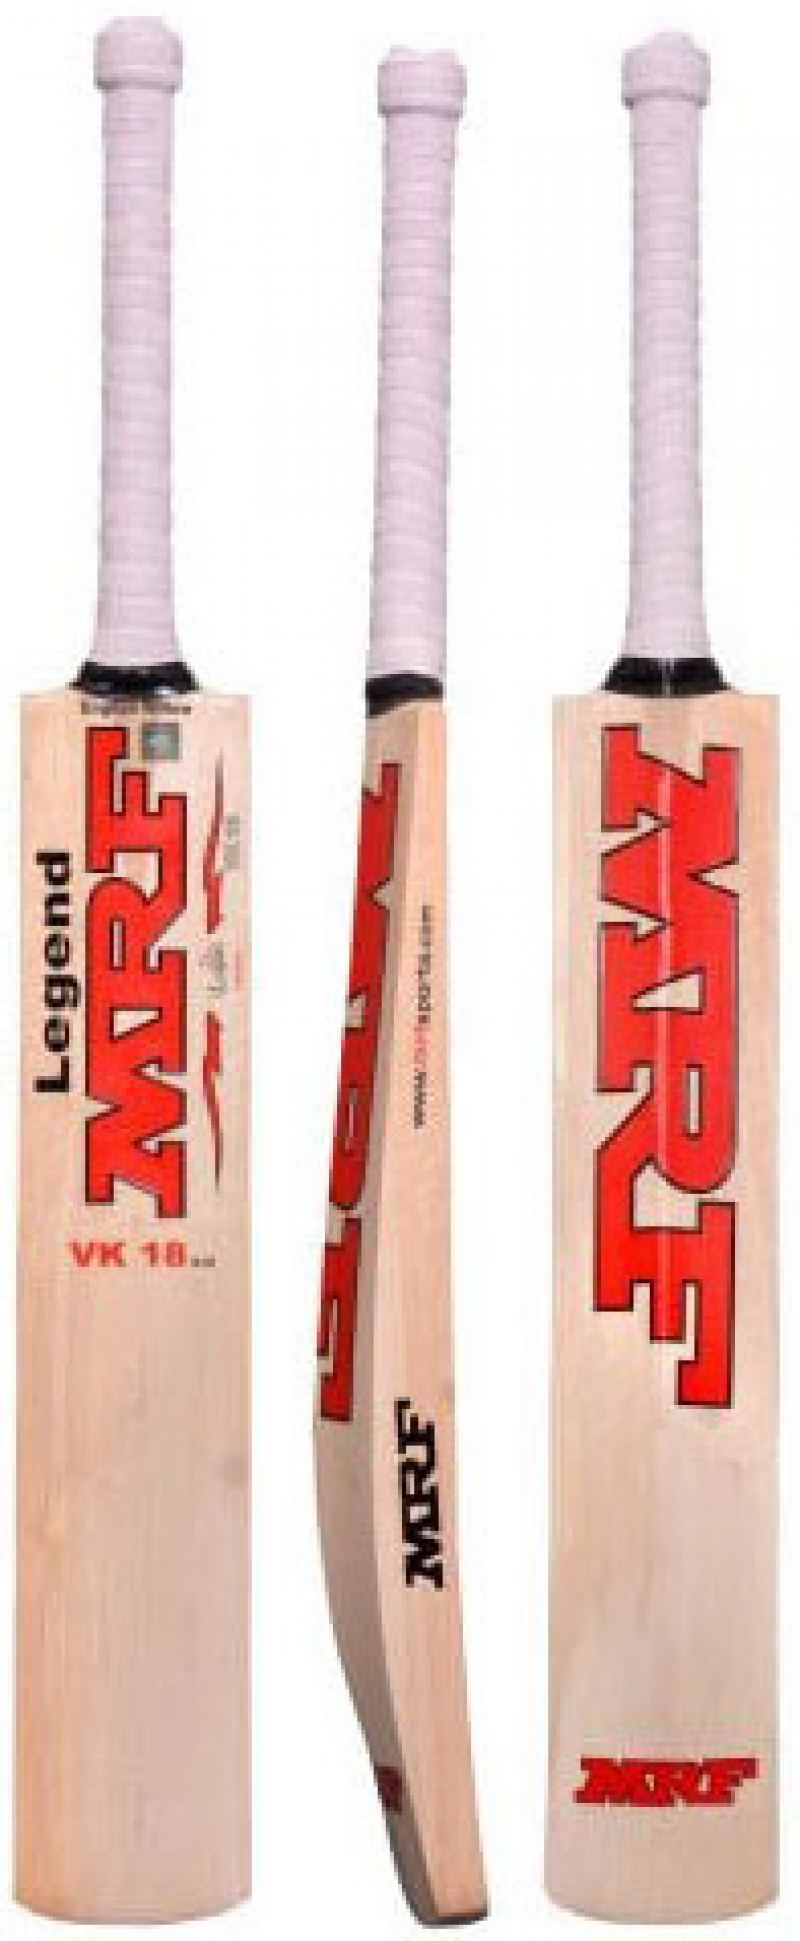 MRF Legend VK 18 1.0 Cricket Bat